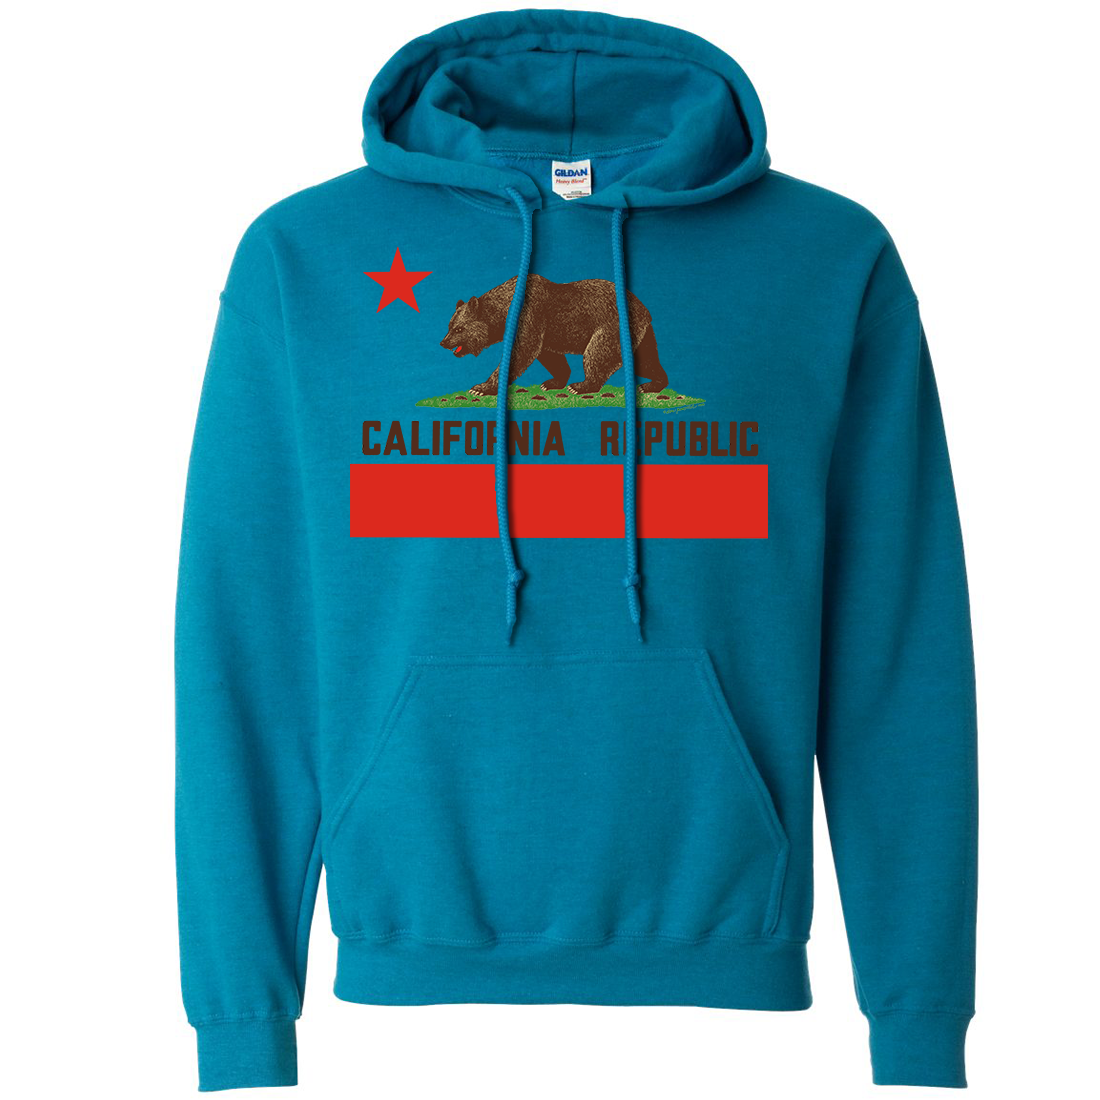 California Republic Clothes - Hoodies, Sweatshirts, Snapbacks and more